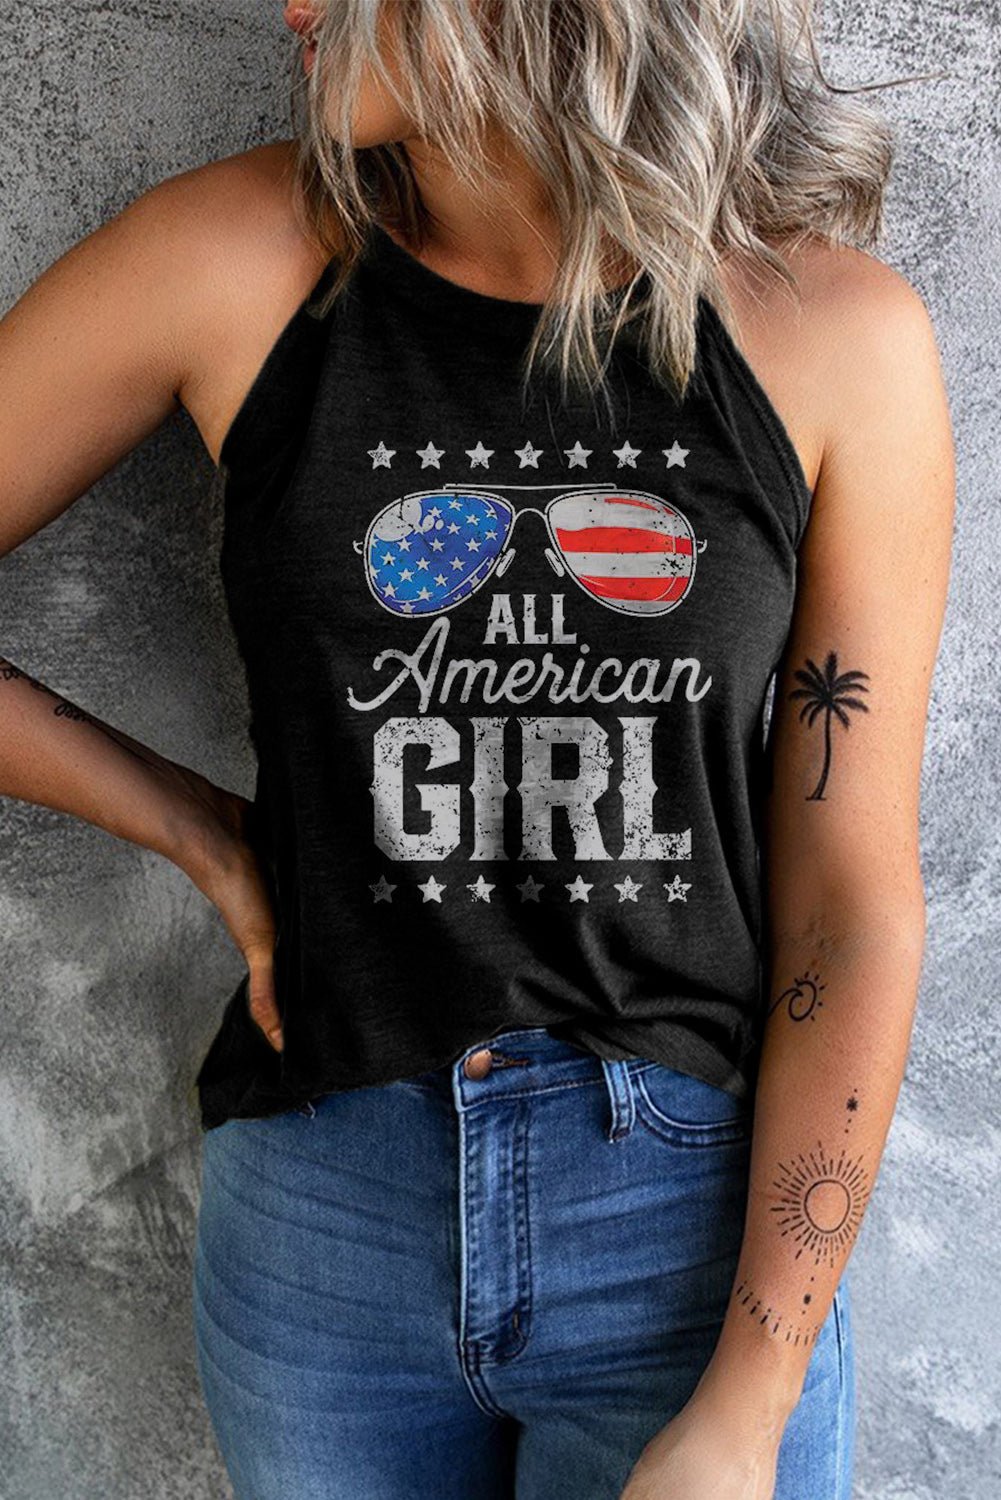 ALL AMERICAN GIRL Graphic Tank - BloomBliss.com